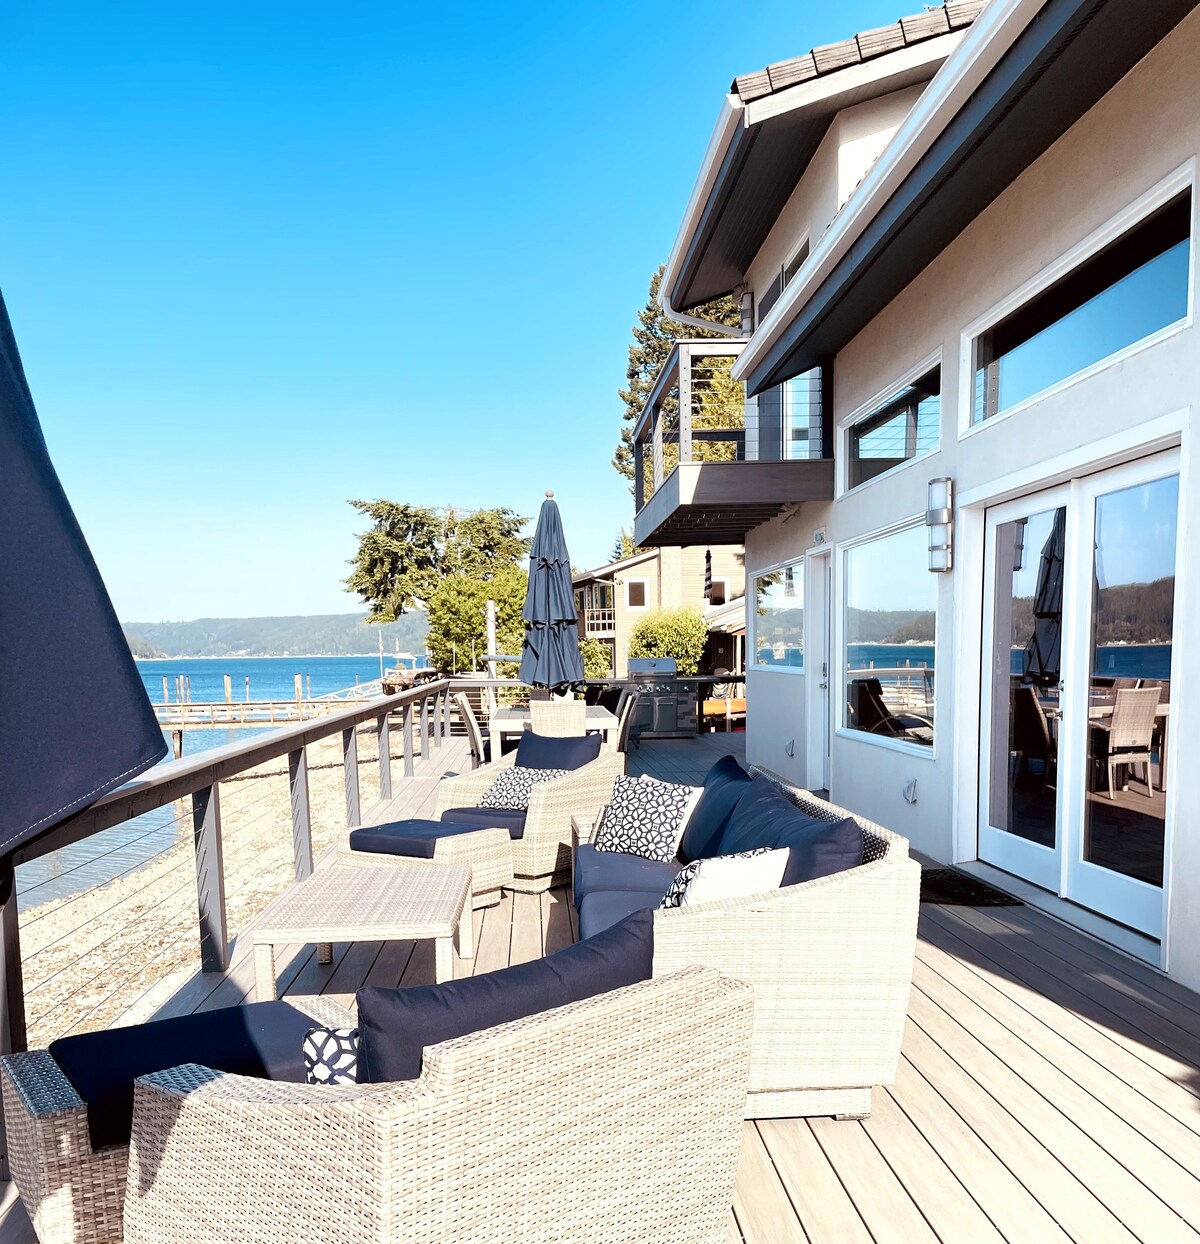 Enjoy a serene waterfront home